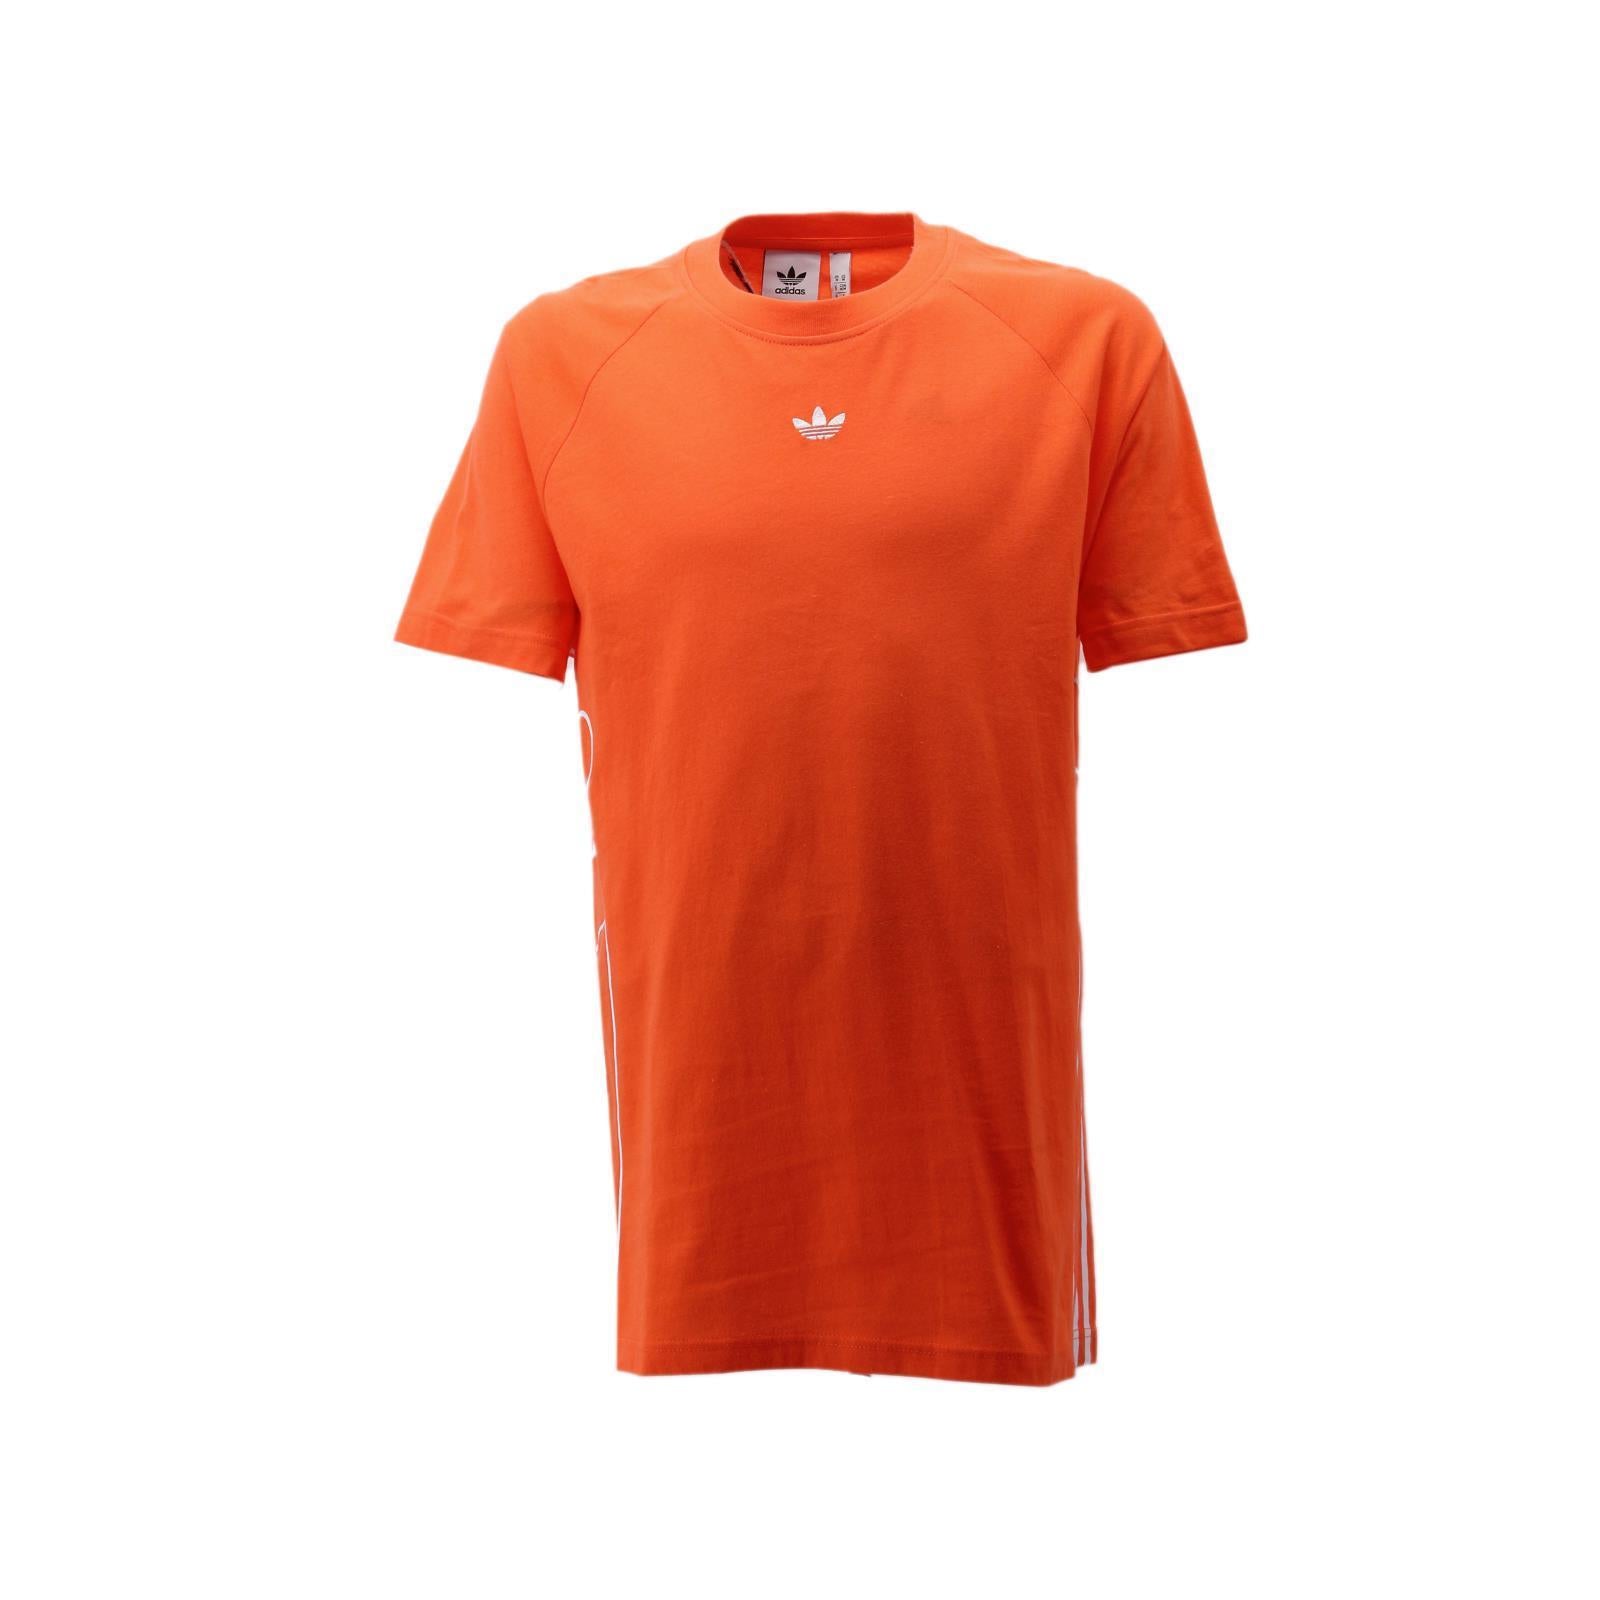 Adidas Originals Flamestrike Trefoil Tee T-Shirt Herren Baumwolle orange DU8108 M